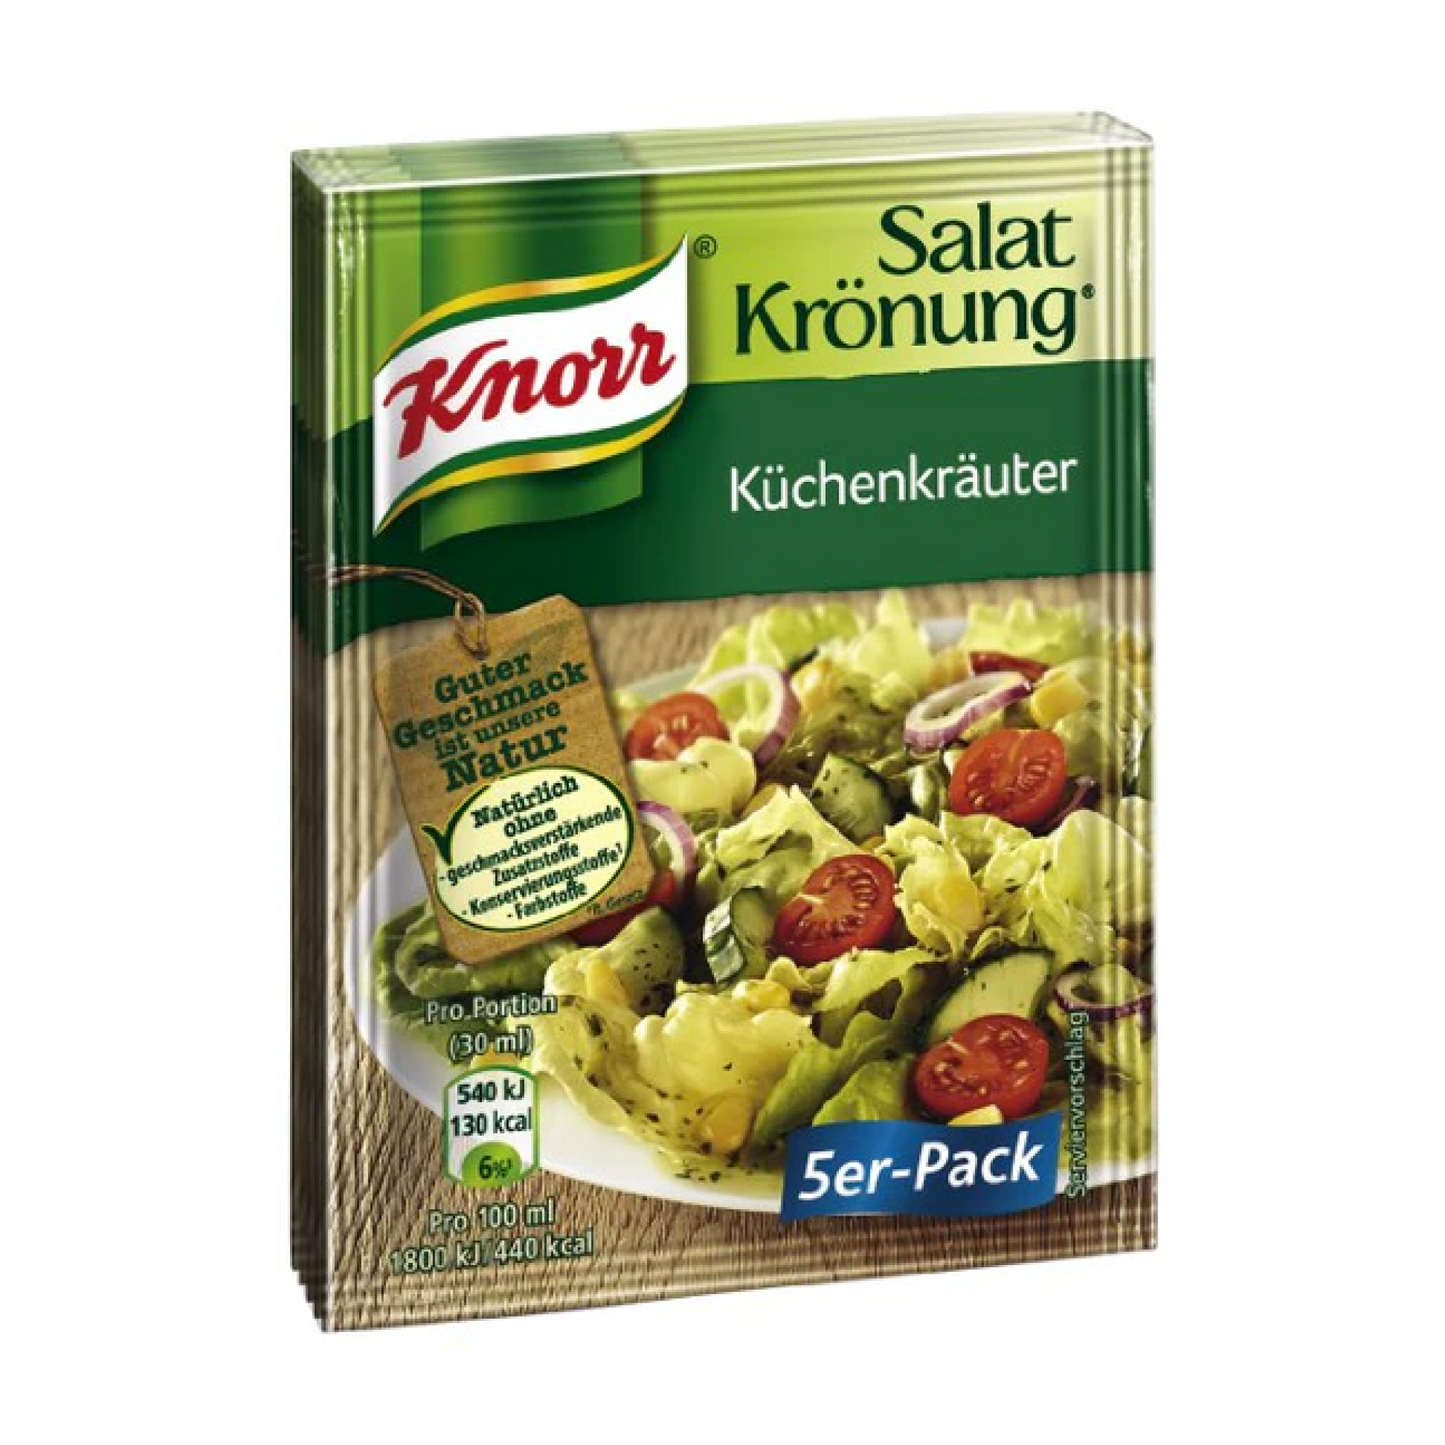 Knorr Küchenkräuter Salat Krönung 5pk 8g